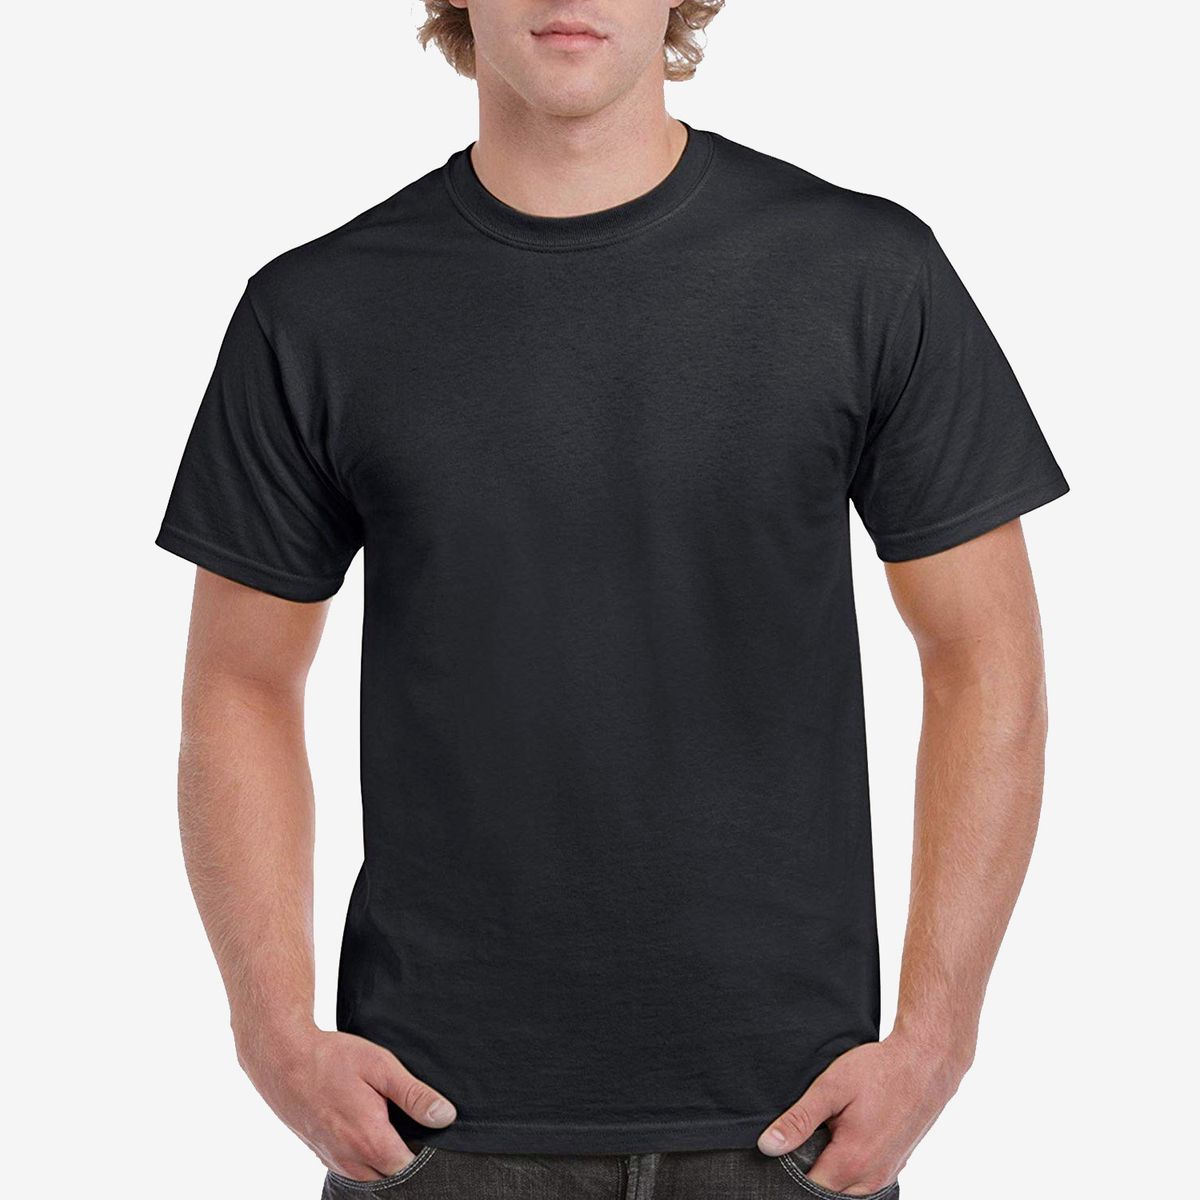 Details about   Pentagon 3T T-Shirt Mens Classic Sport Outdoor Hiking Quick Dry Cotton Top Black 